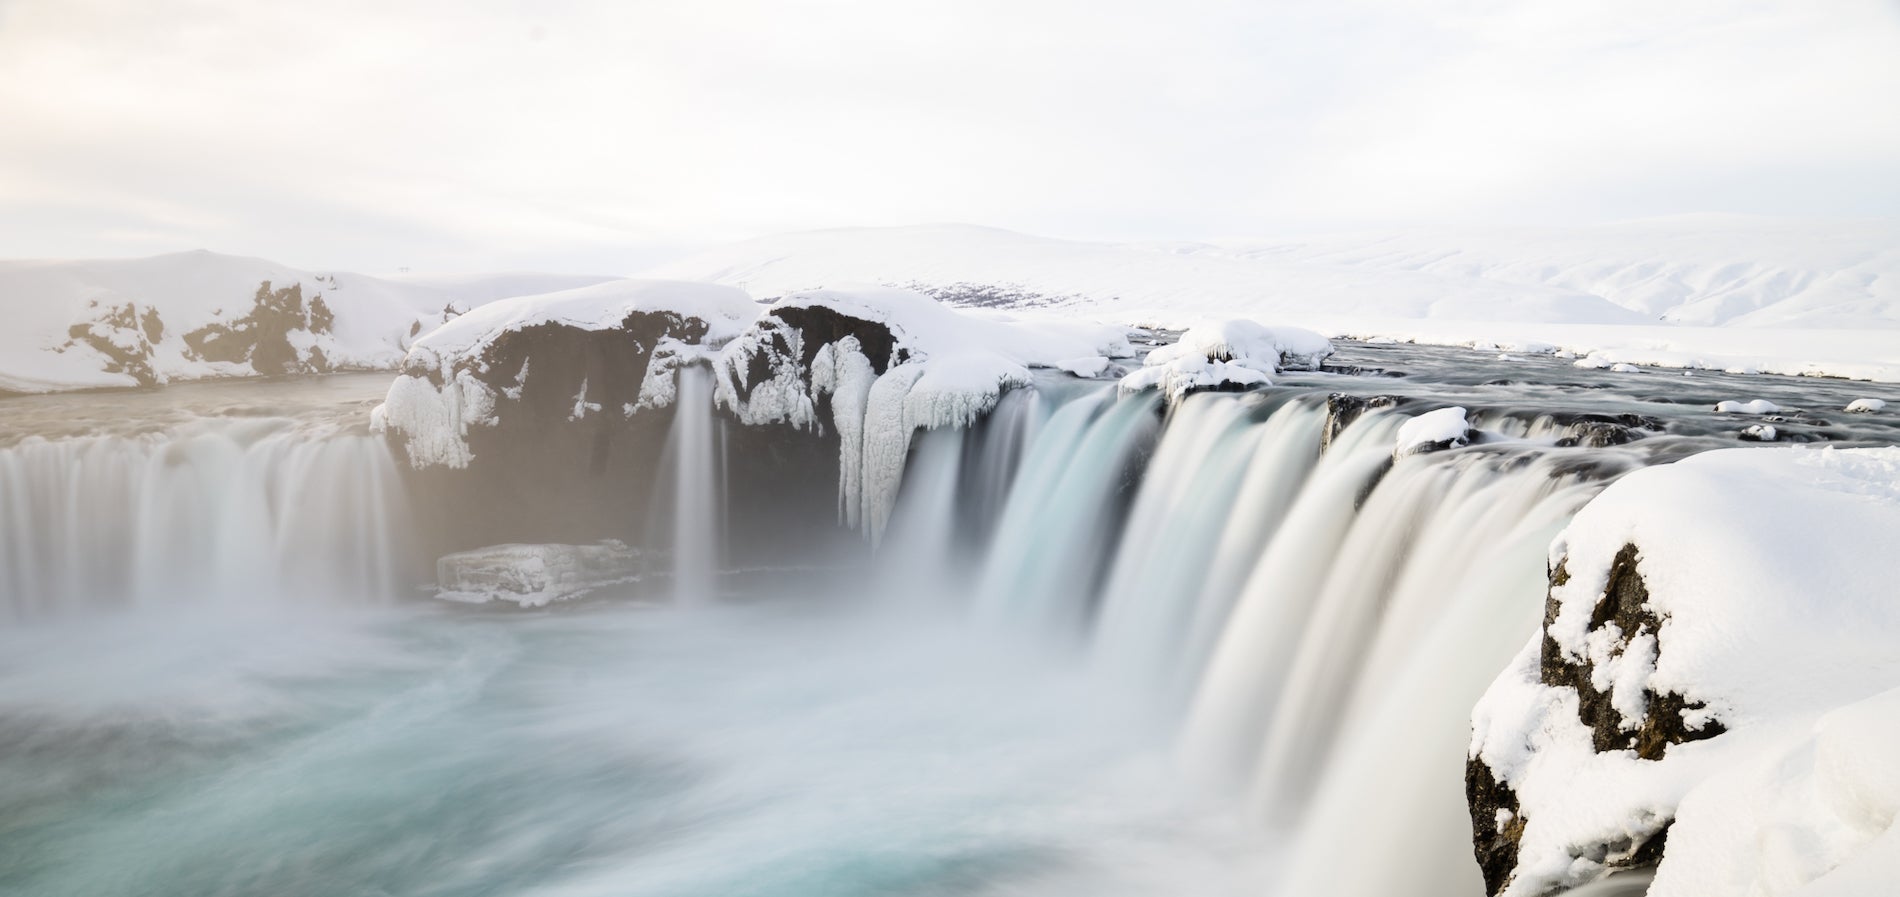 Chris Burkard photo of Arctic waterfall